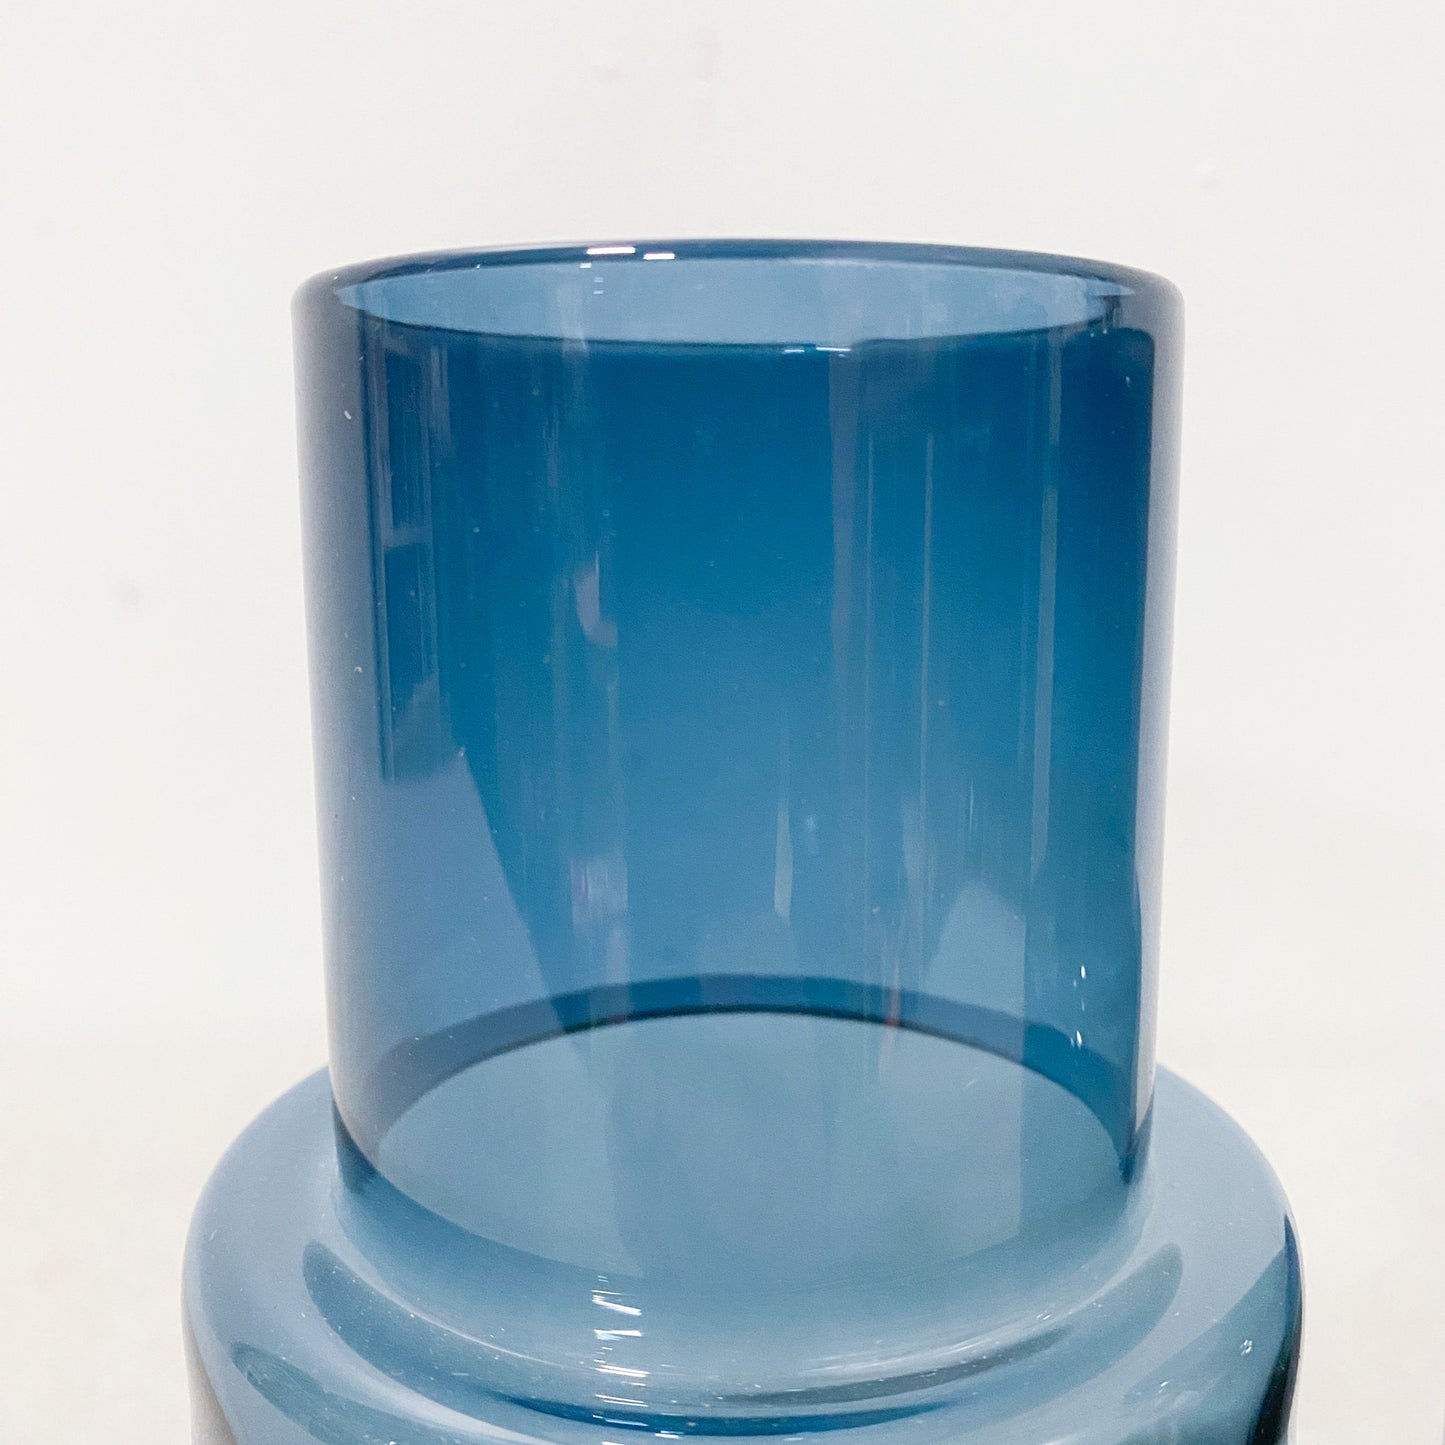 Blue Glass Bud Vase (Set of 2)